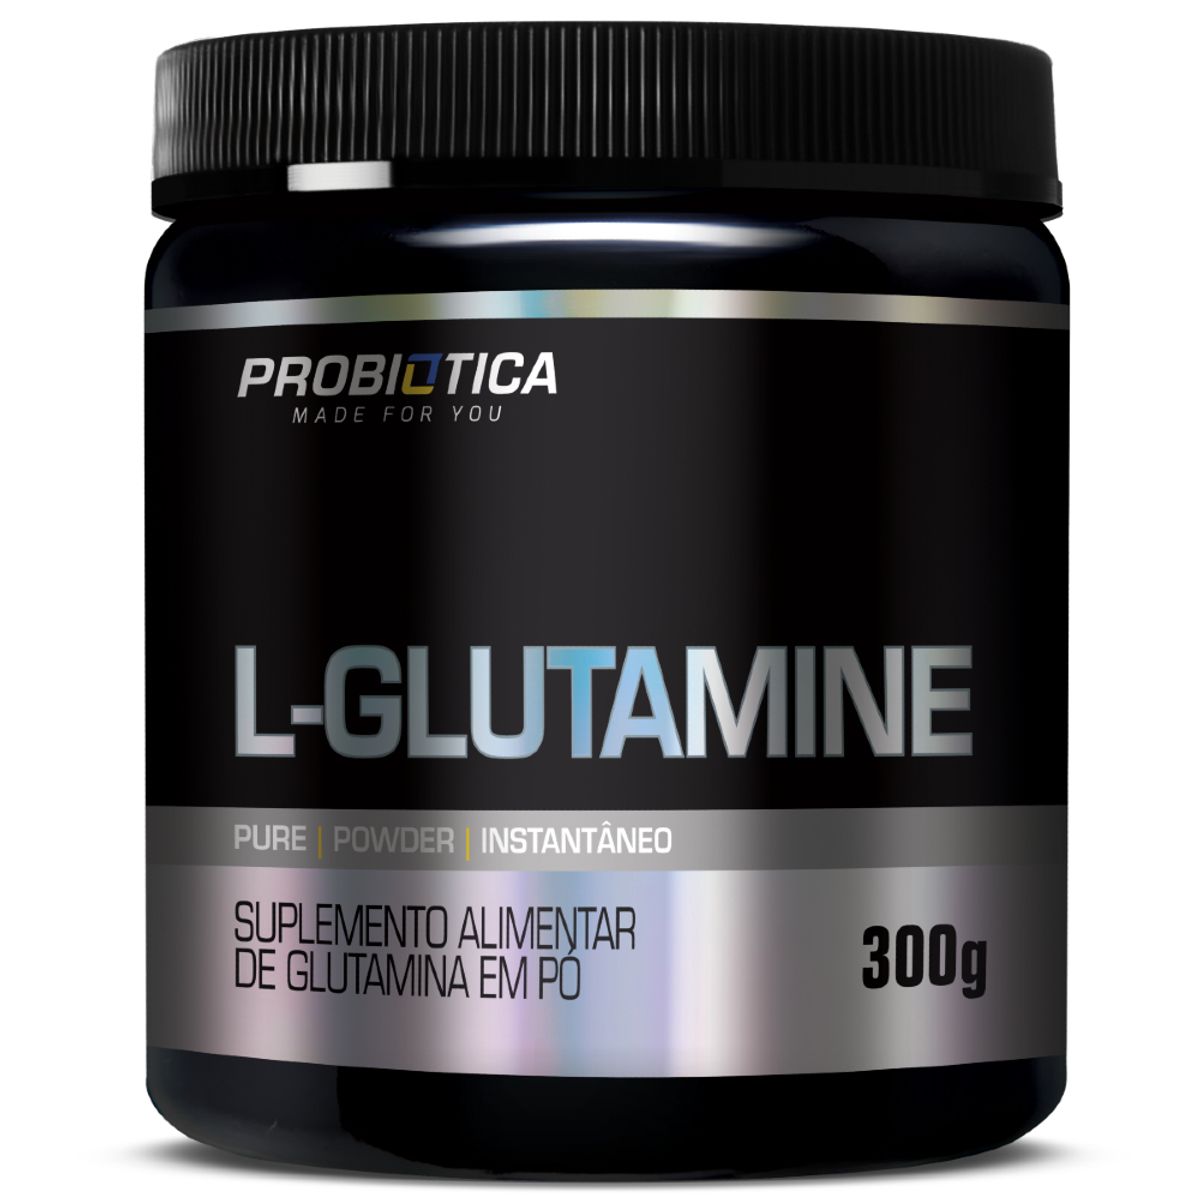 Polvo Soluble de L-Glutamina - Probiótico